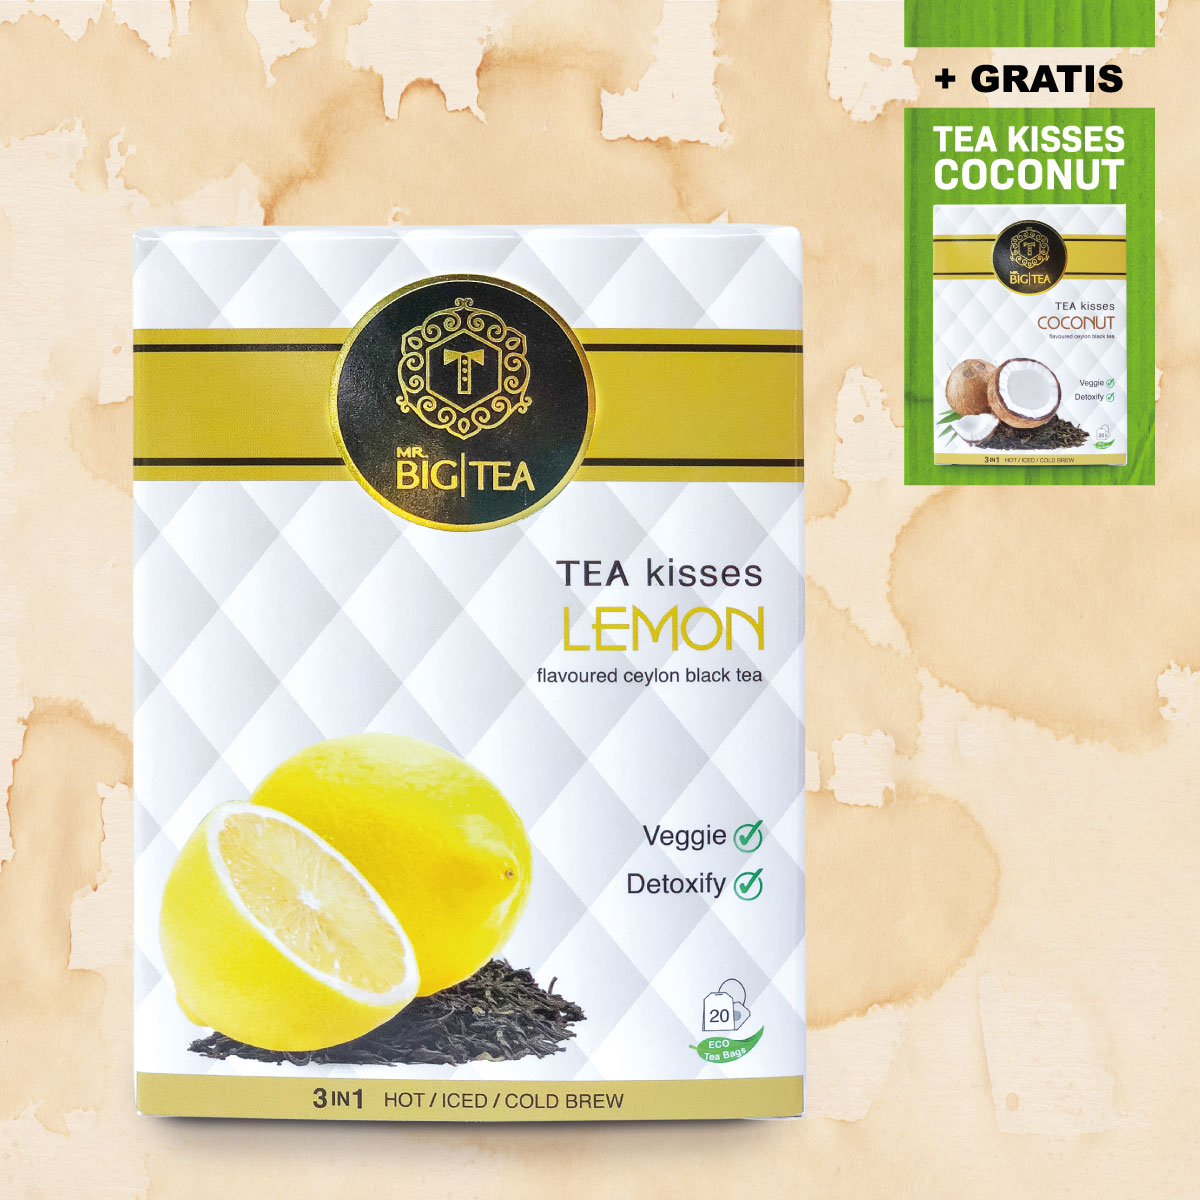 MR. BIG TEA Ceylon-Schwarztee mit Lemon (3IN1) 2g x 20 Teebeutel